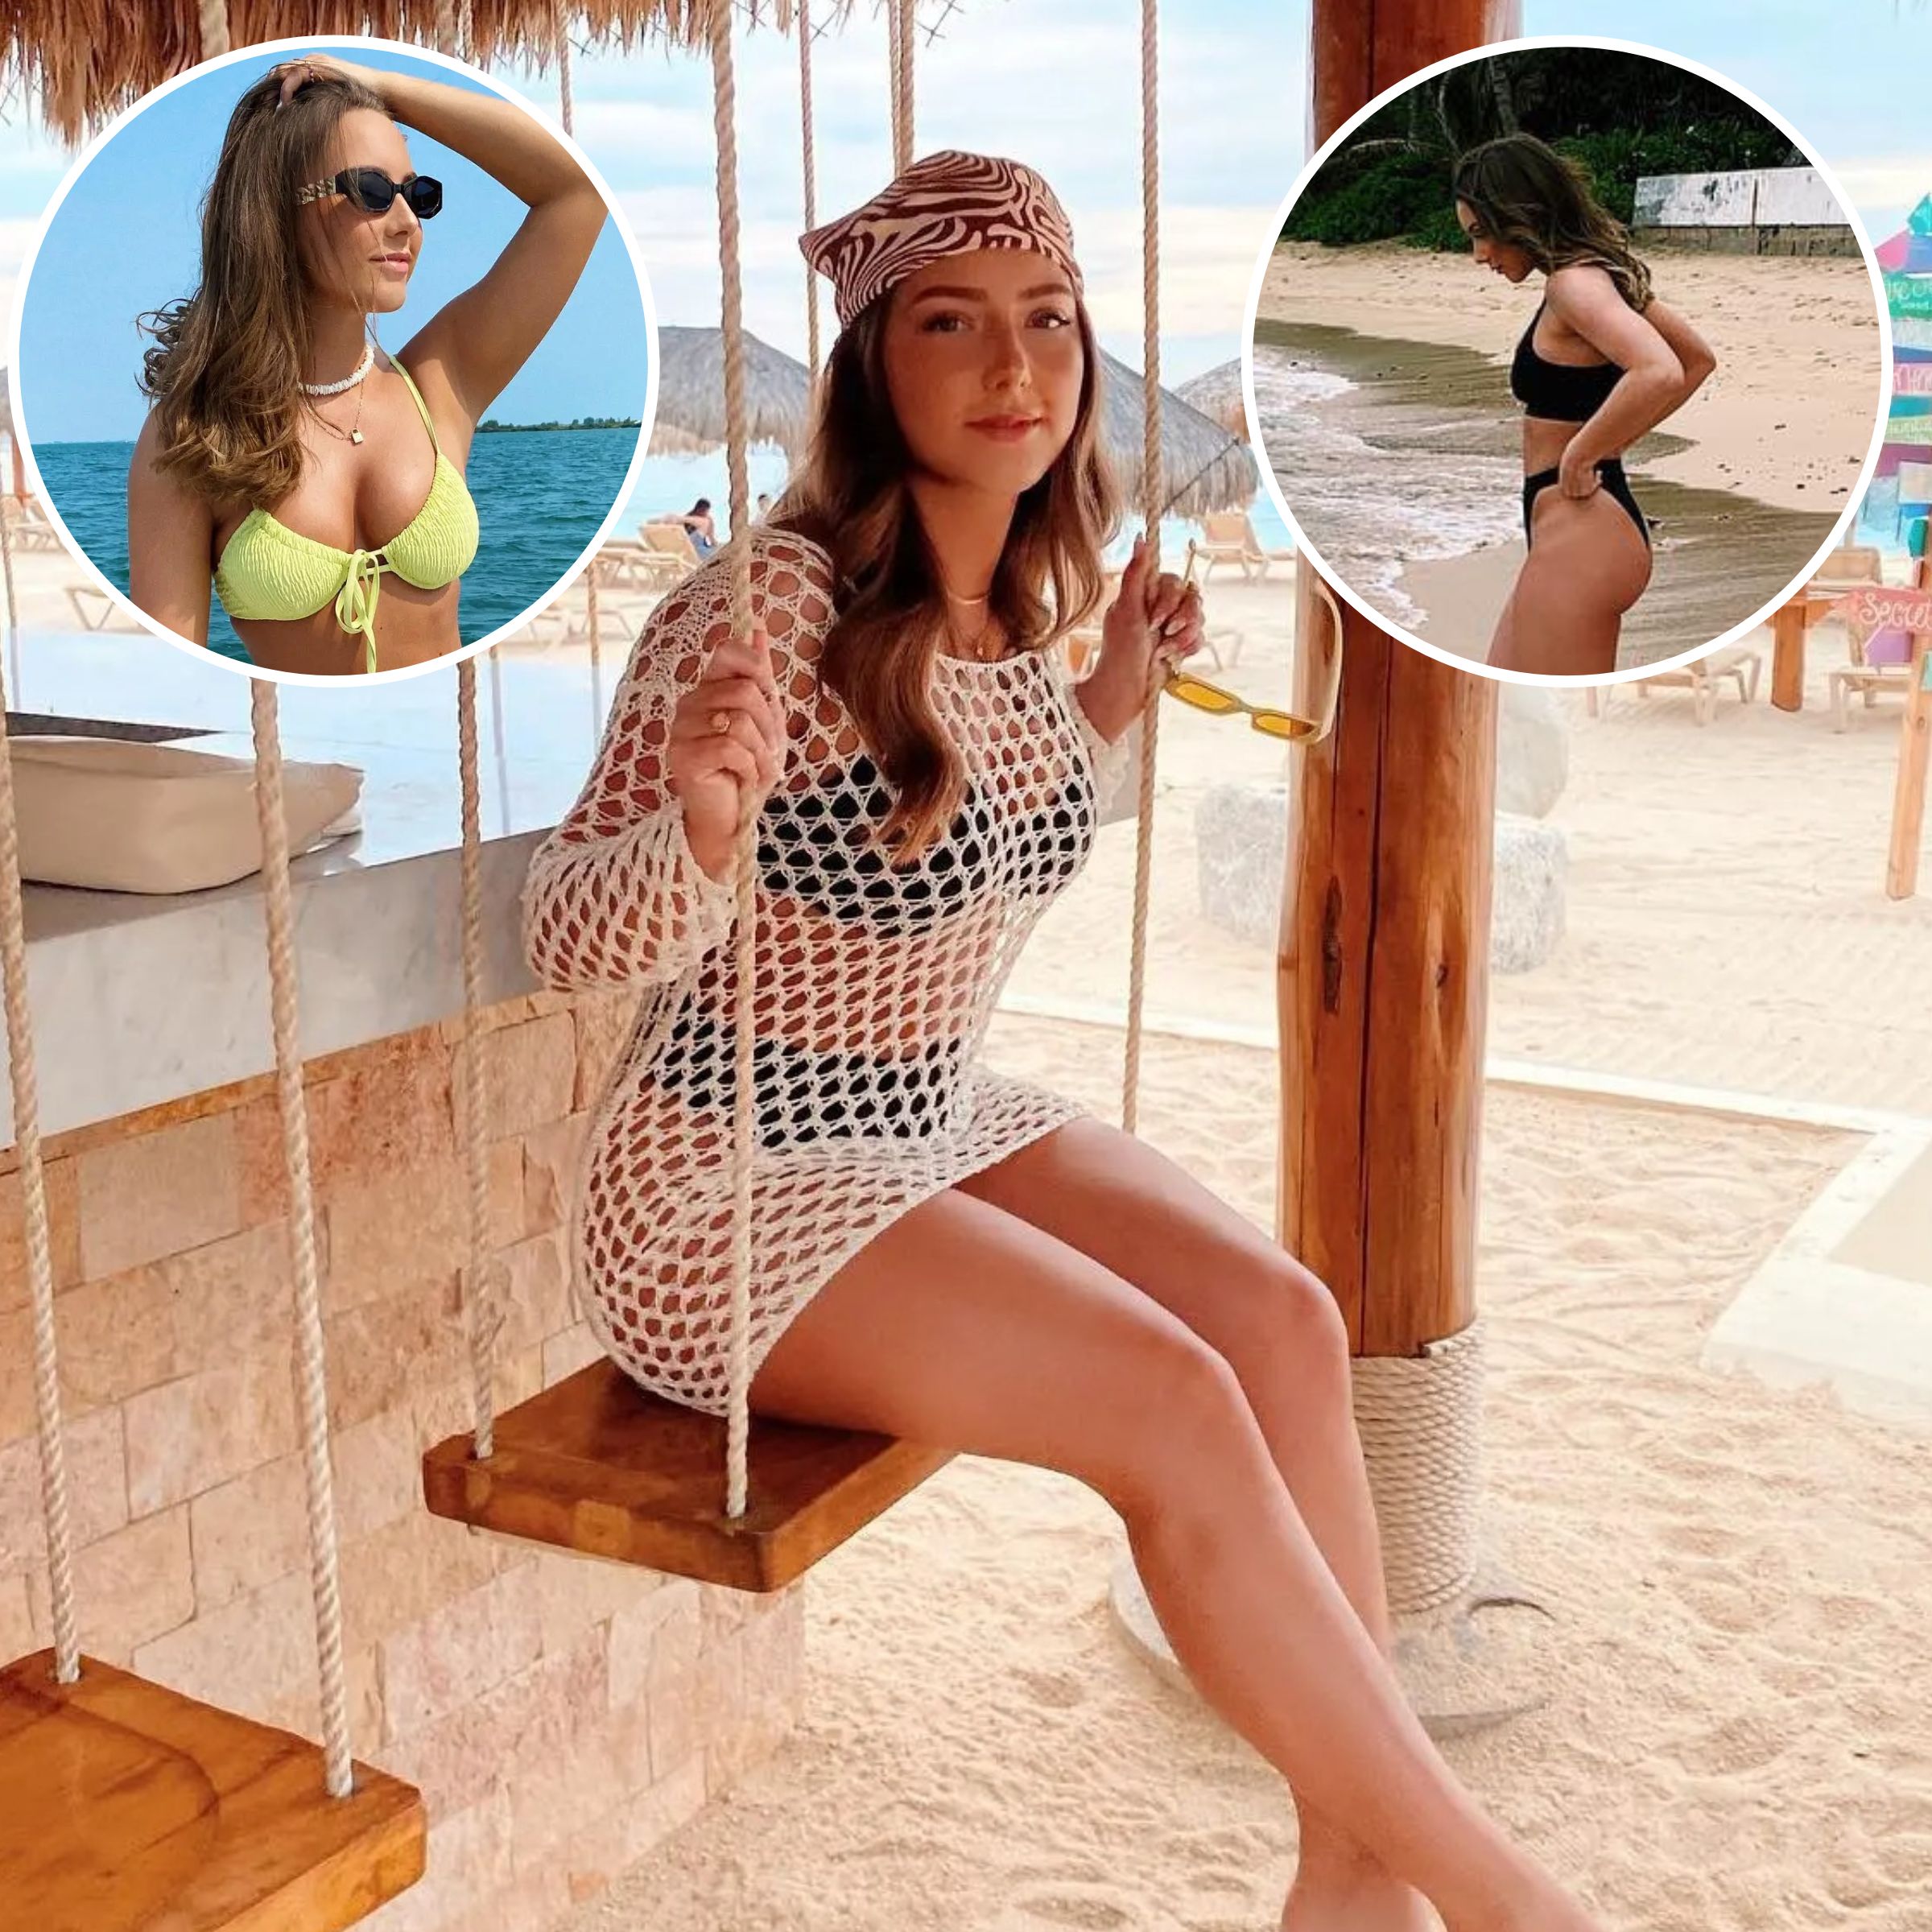 Hd Nude Beach Girls - Hailie Mathers Bikini Photos: Beach Pics of Eminem's Daughter